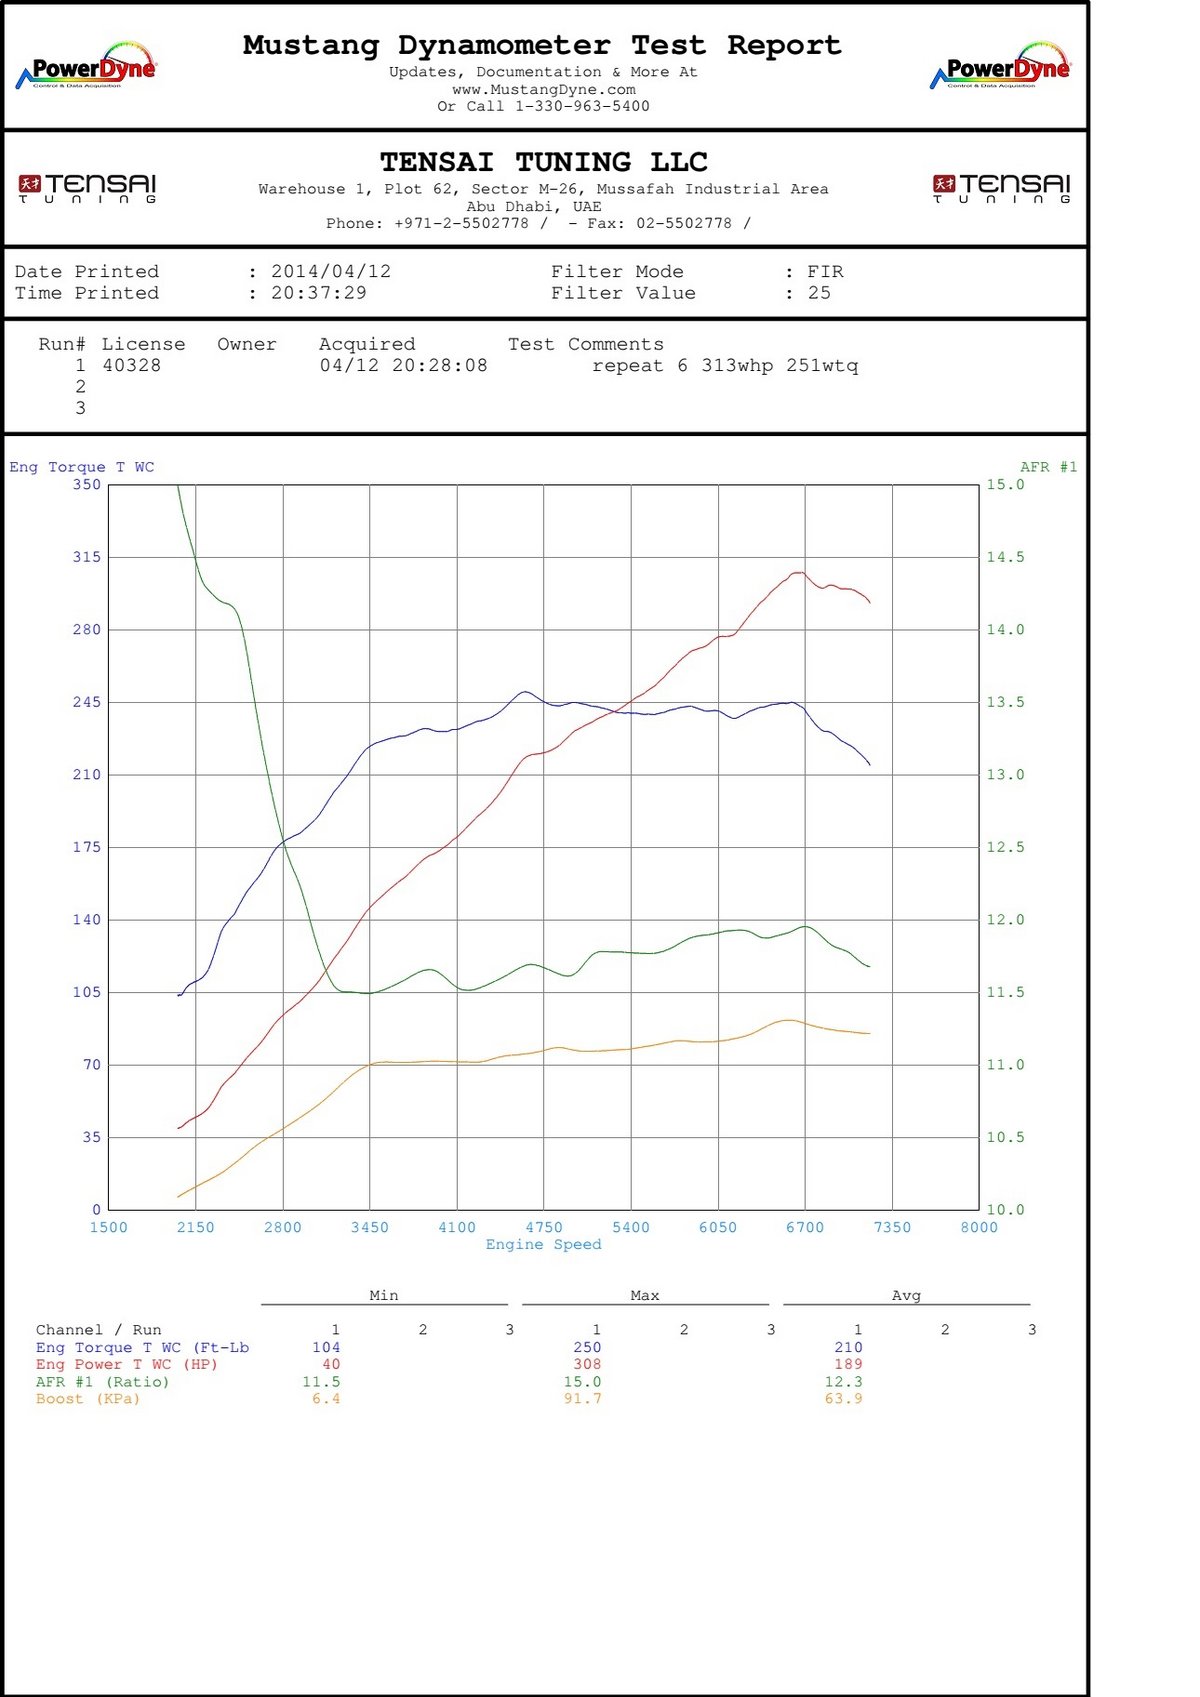 Subaru BRZ Dyno Graph Results